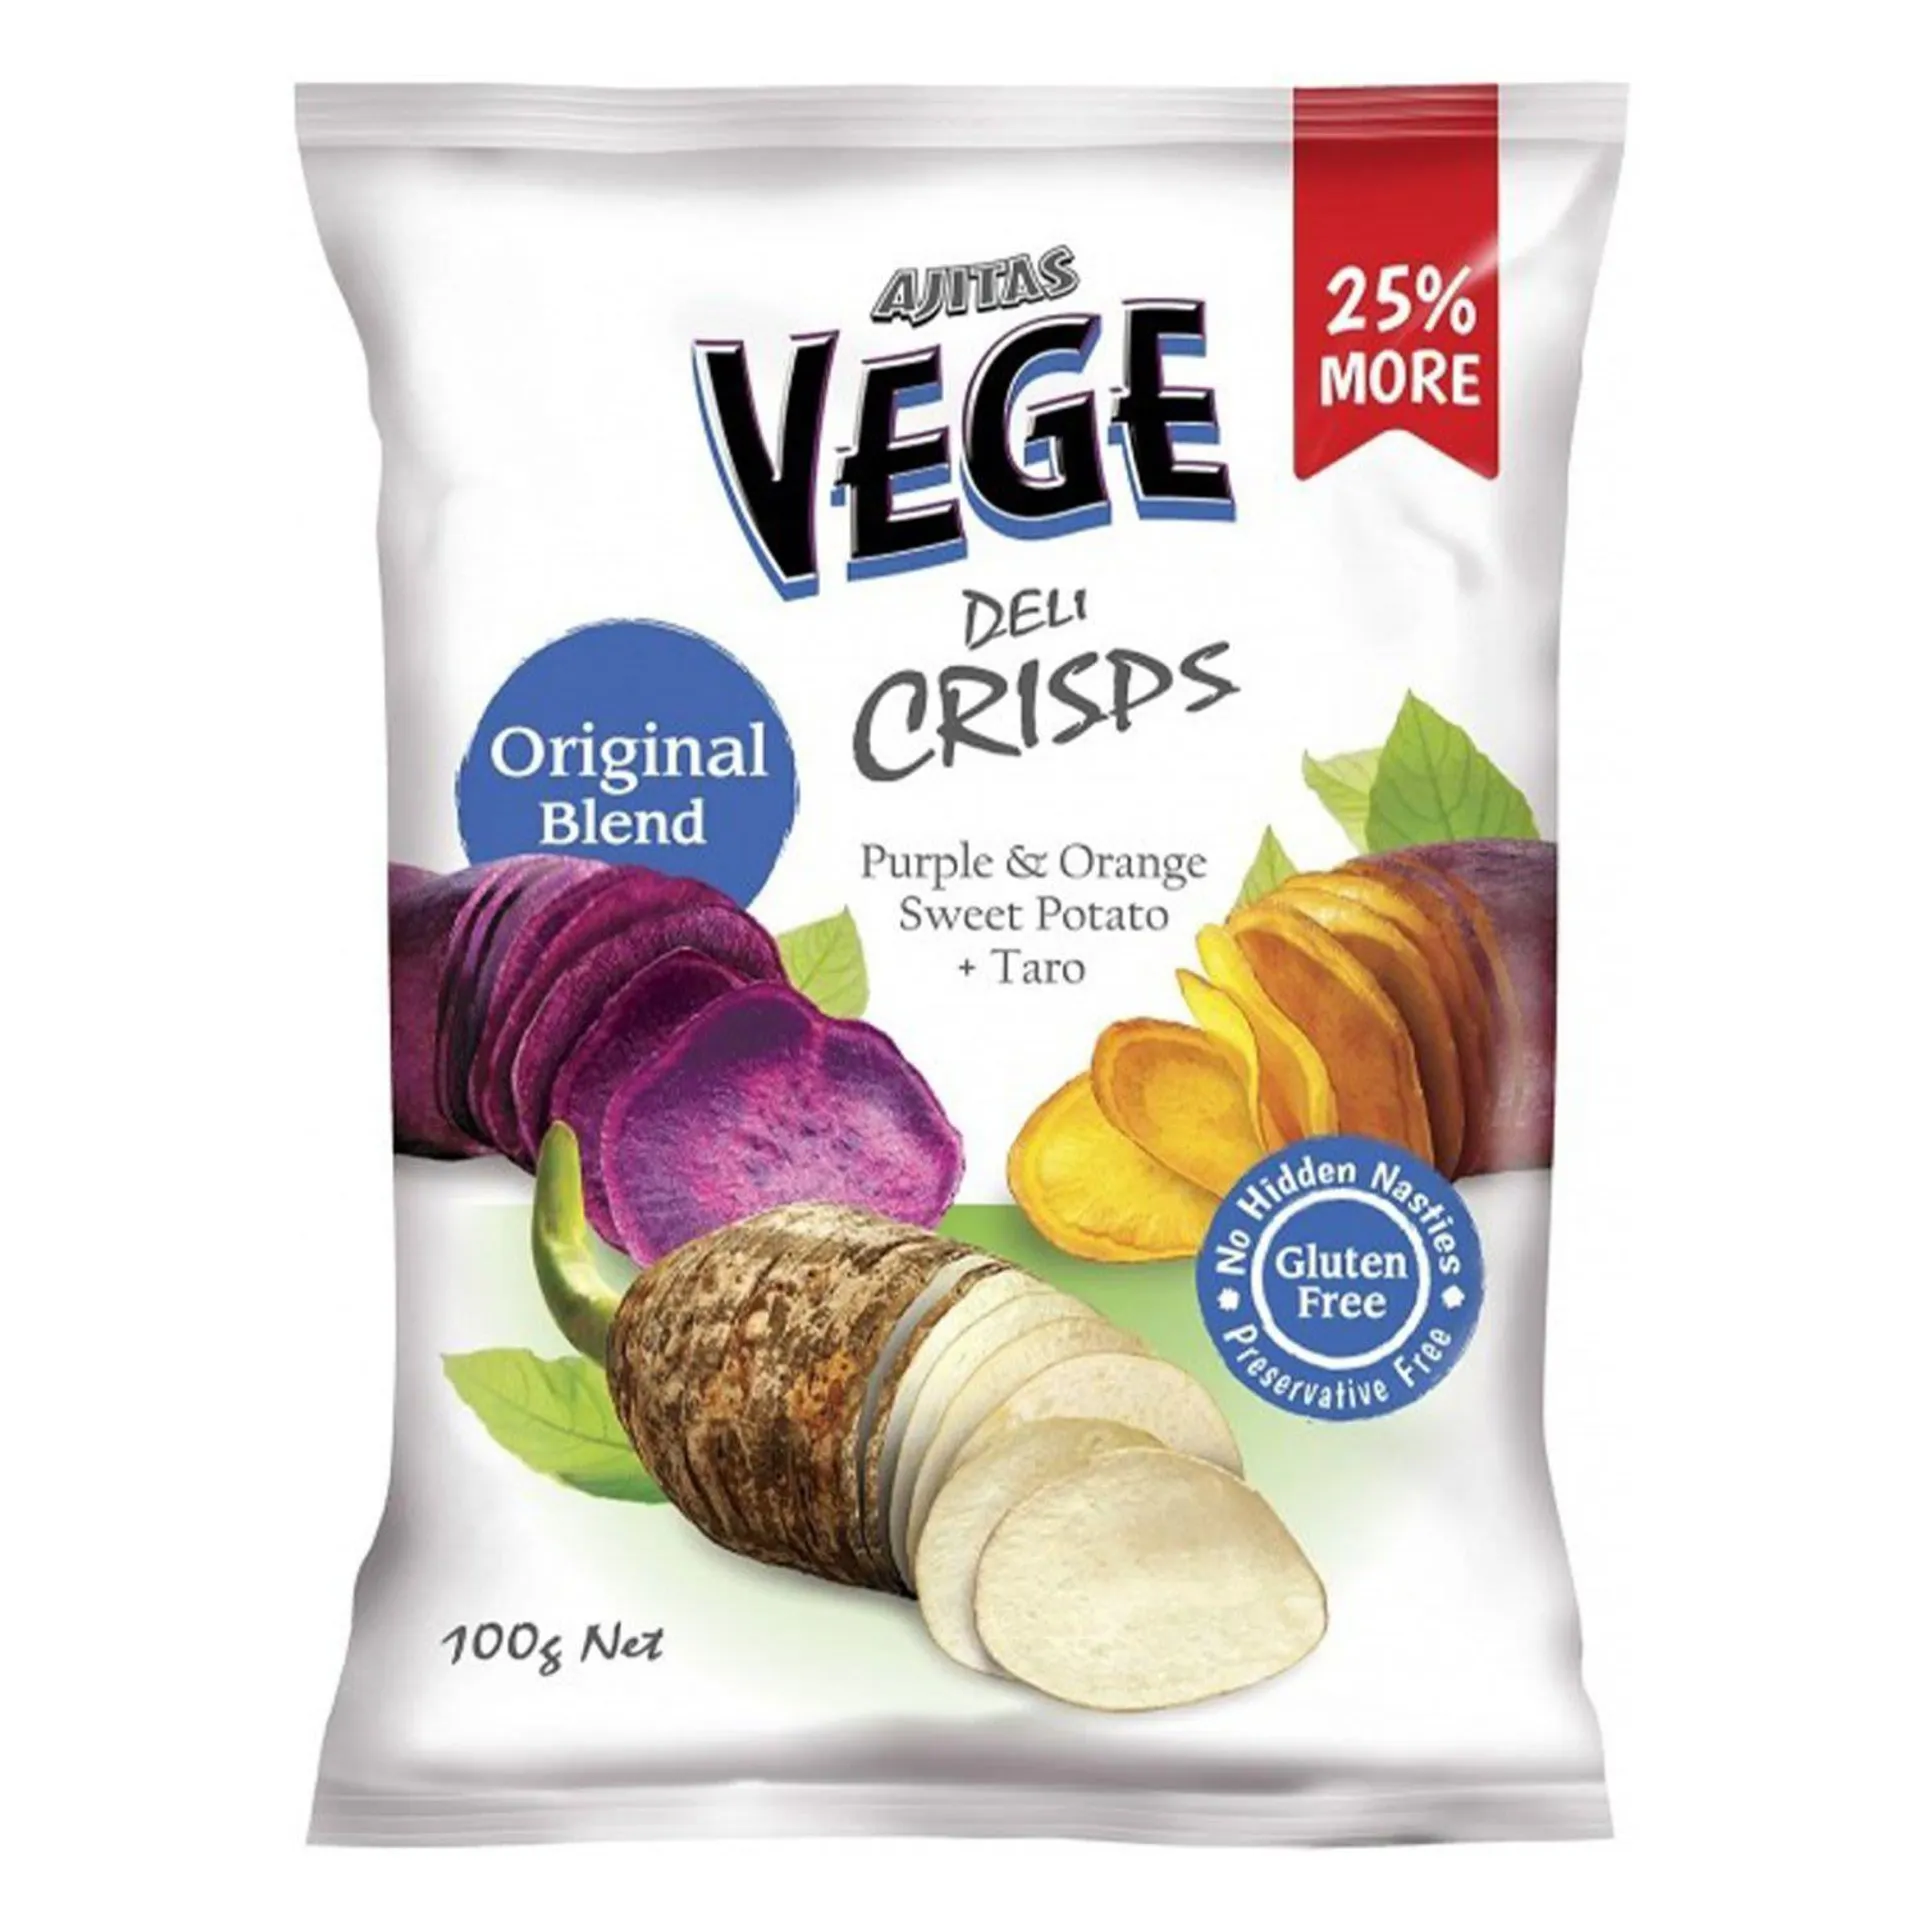 Ajitas Vege Chips Deli Crisps Original